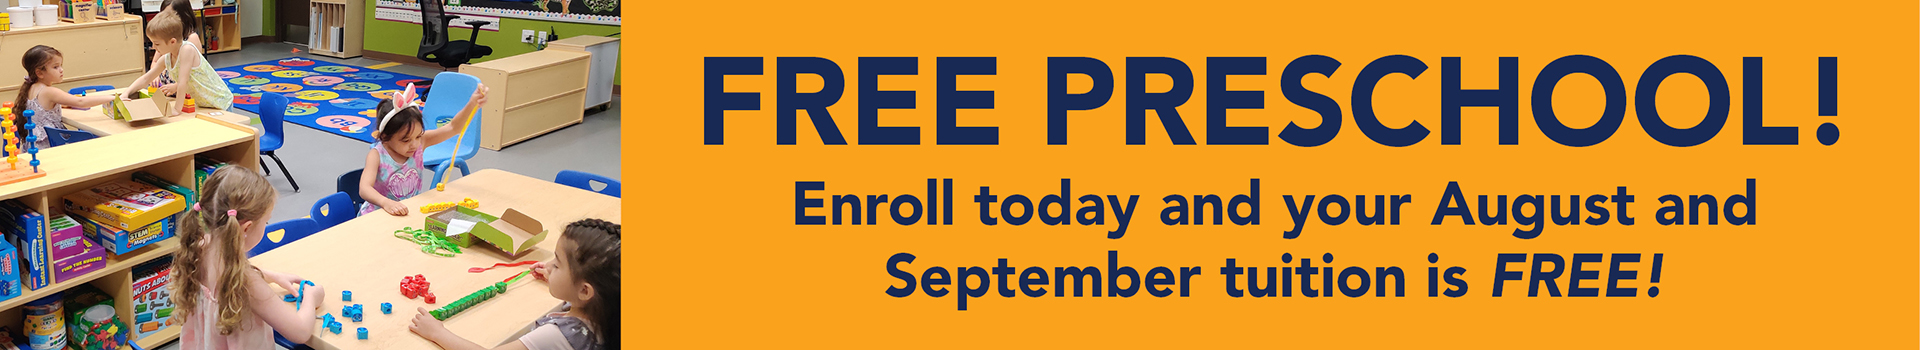 Free preschool enroll today